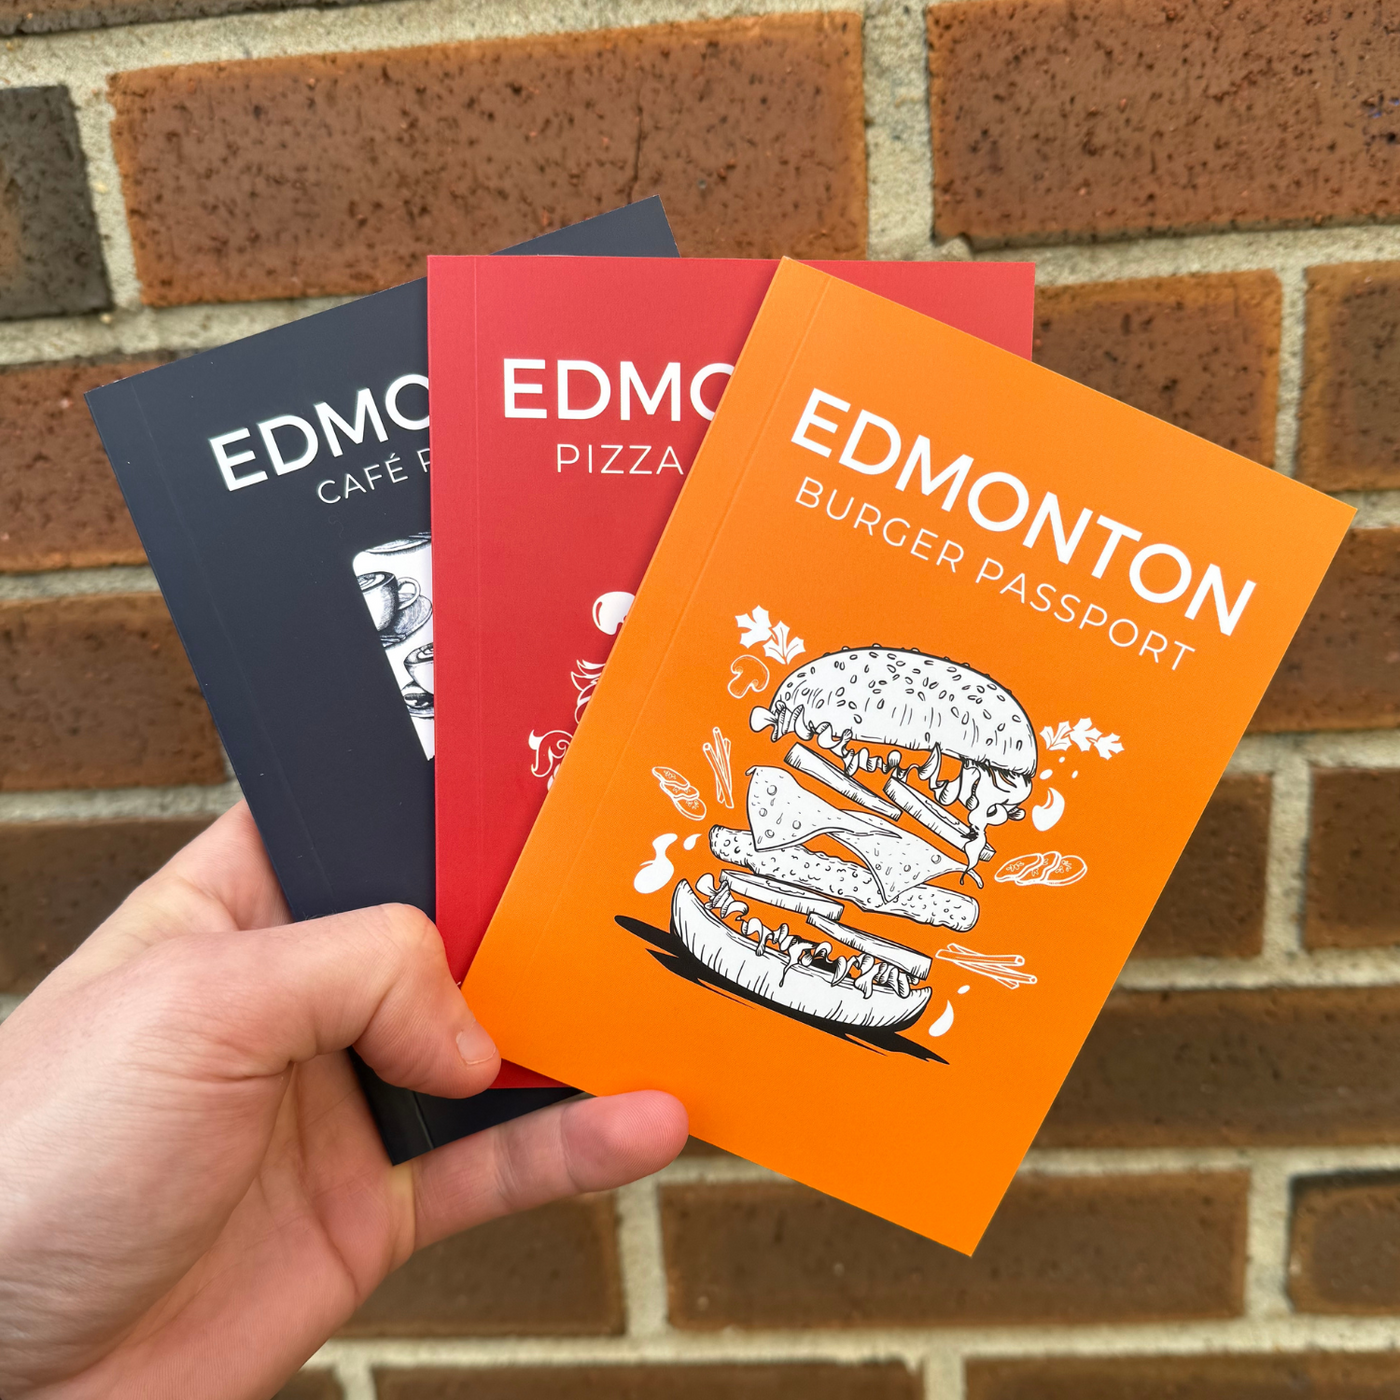 Edmonton Cafe, Pizza, & Burger Passport Cover